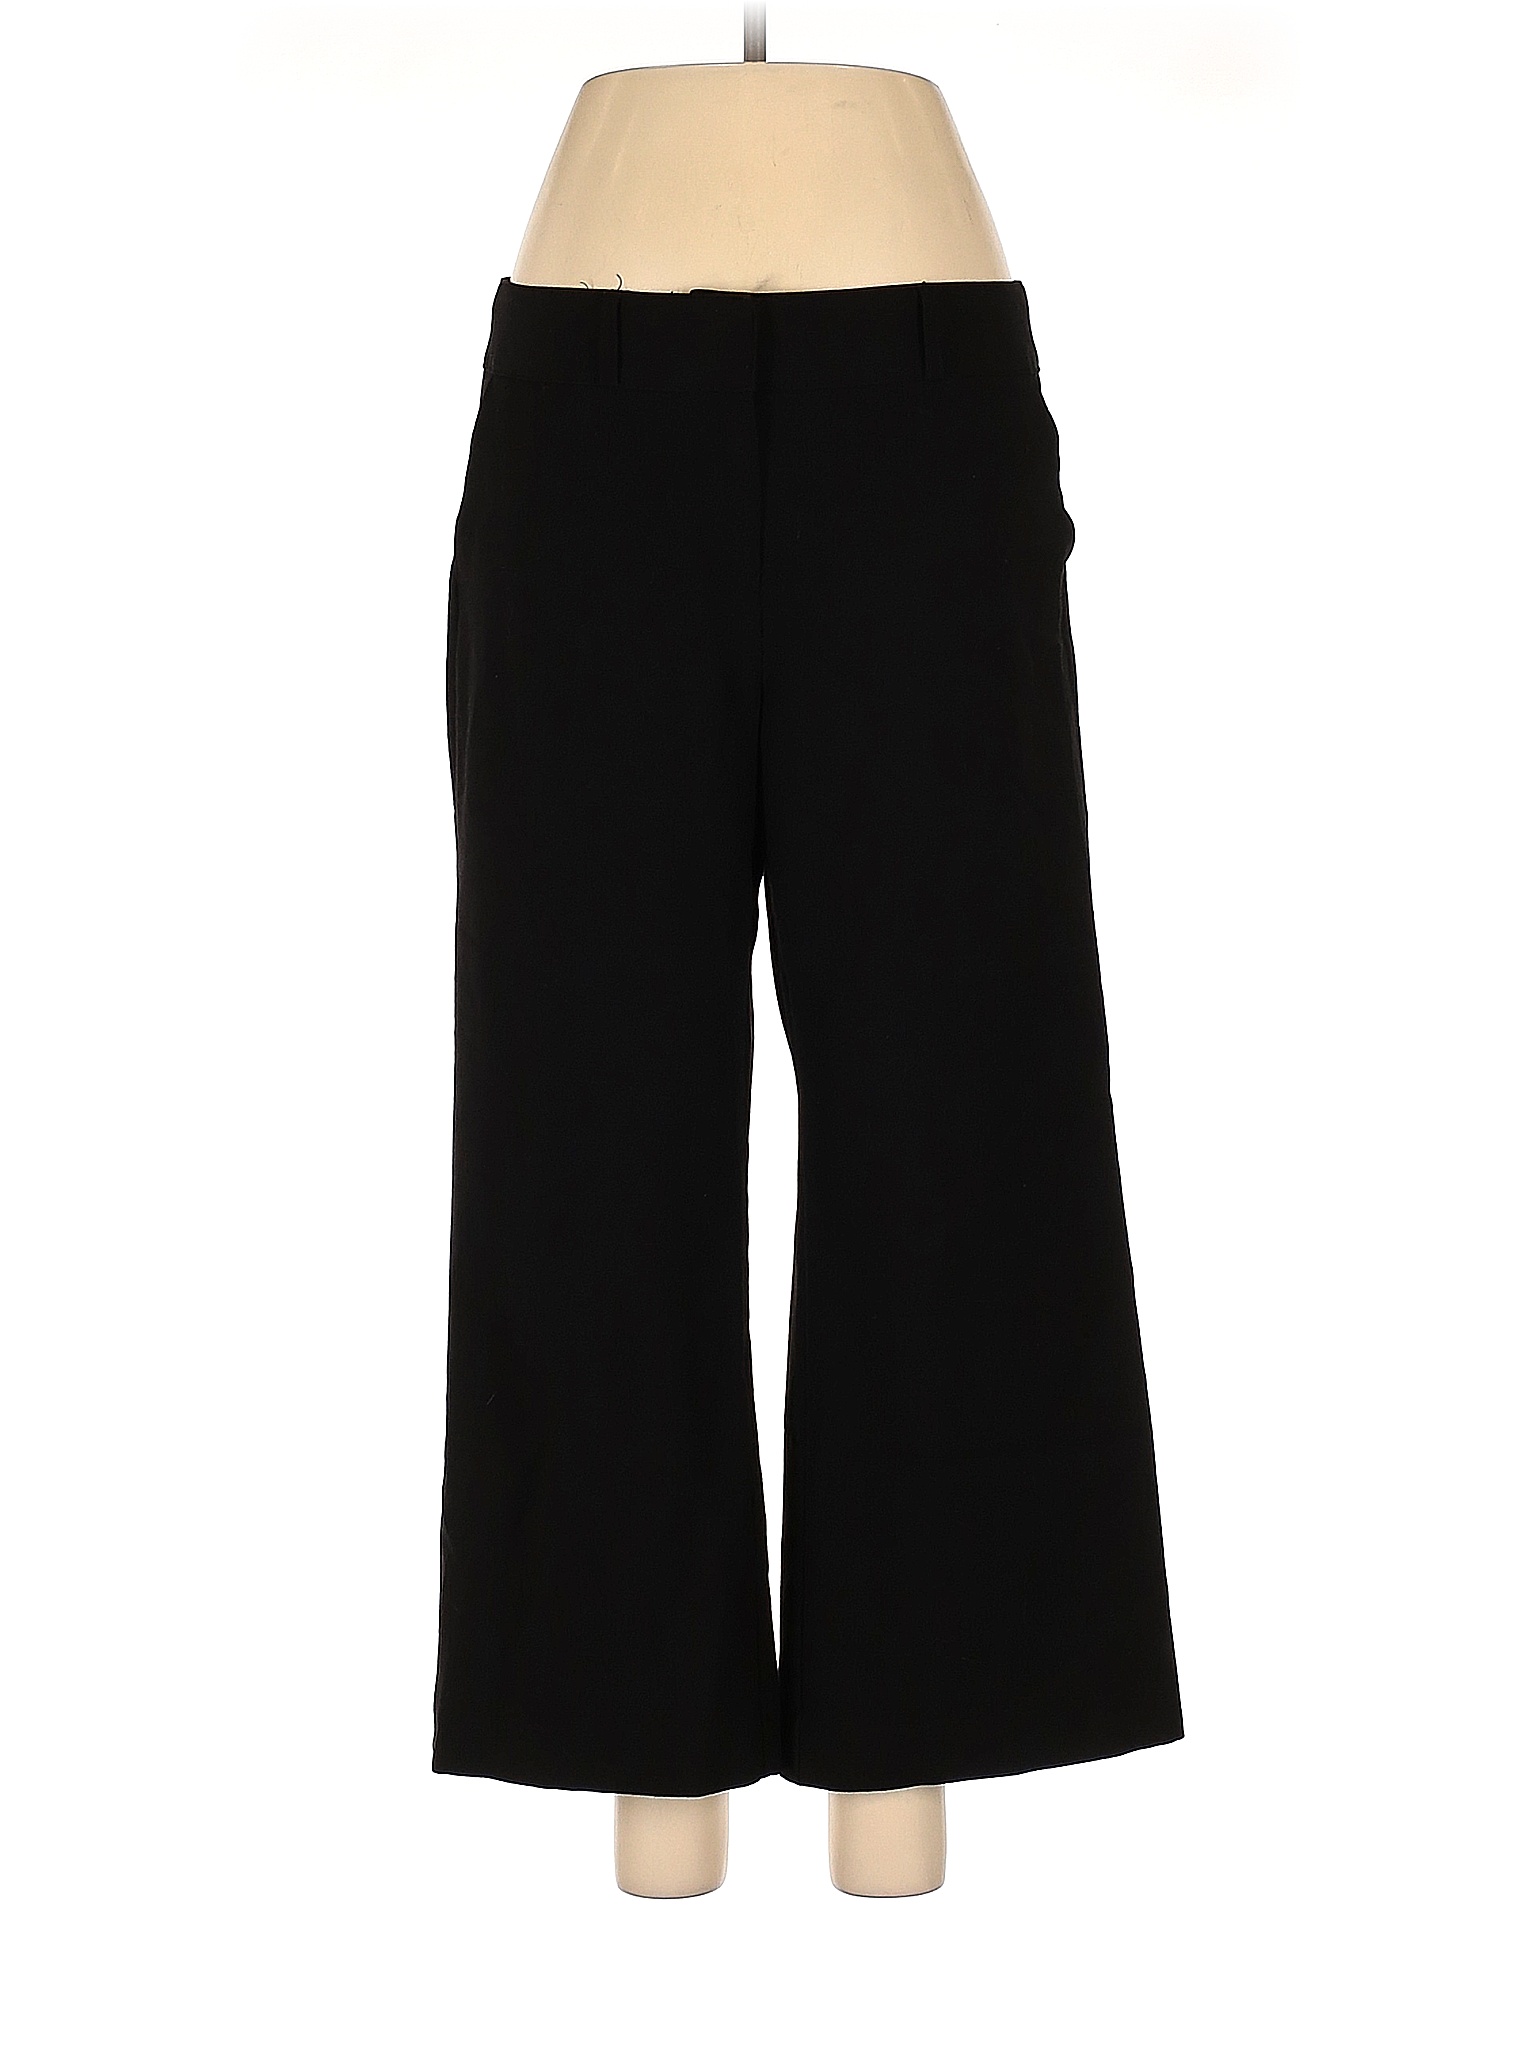 Notations Solid Black Dress Pants Size 6 - 58% off | thredUP